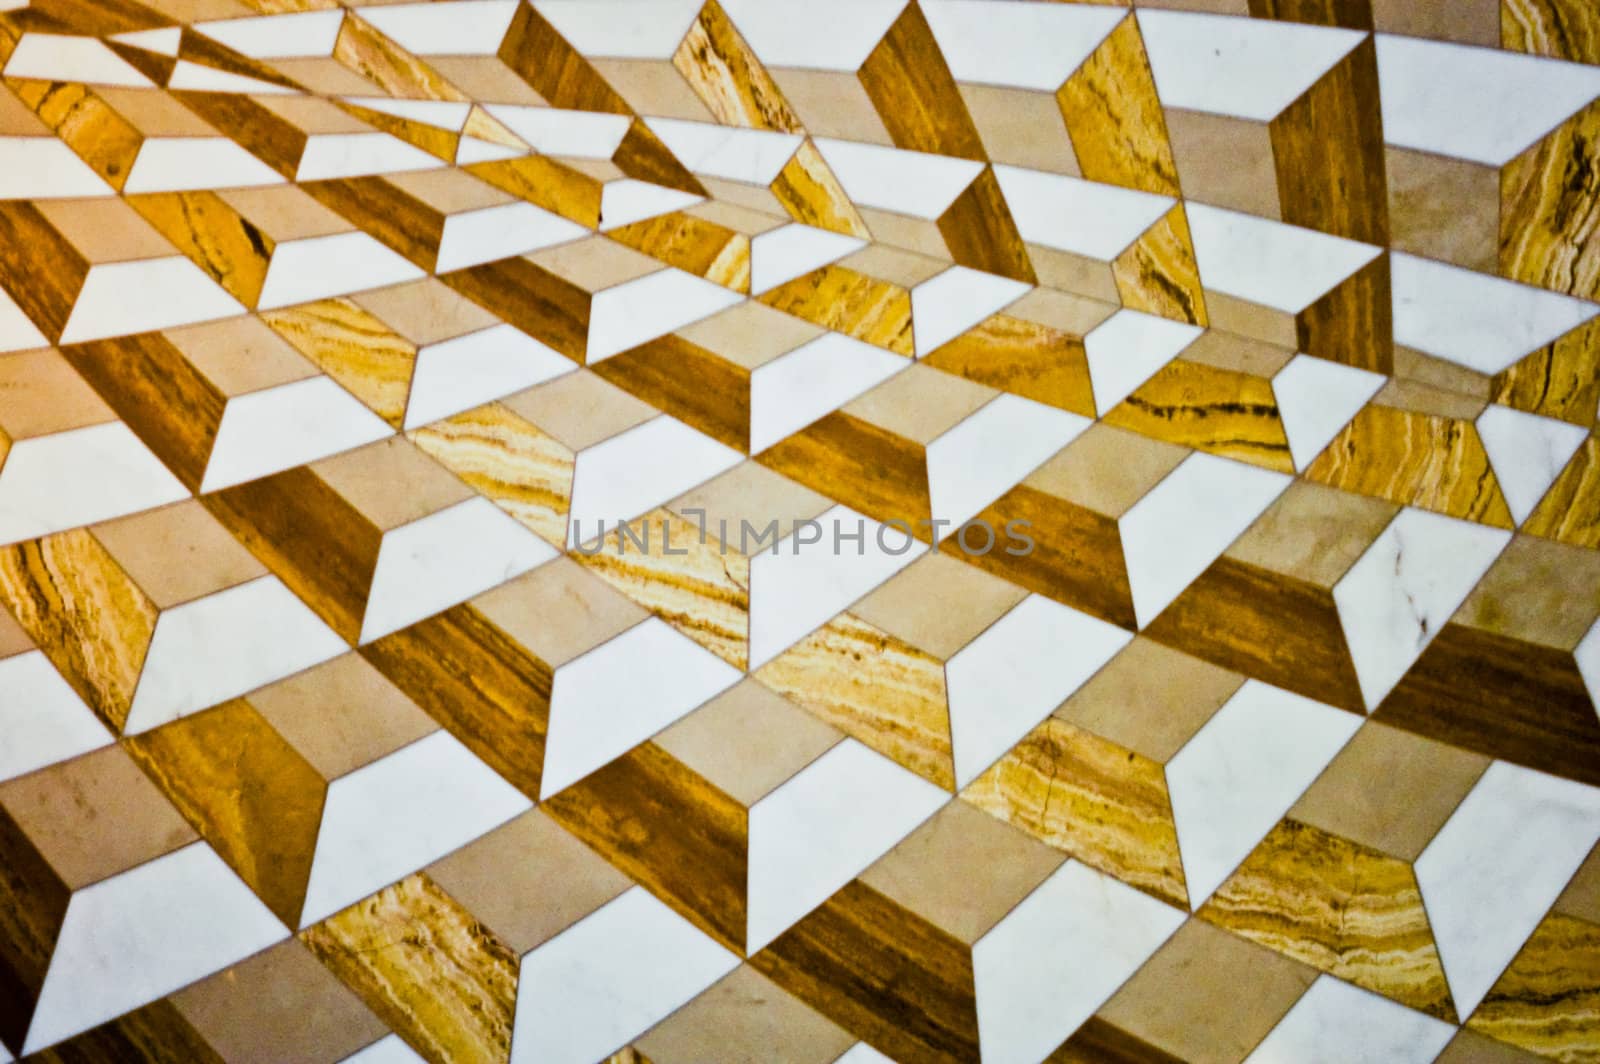 Block patterns on a floor